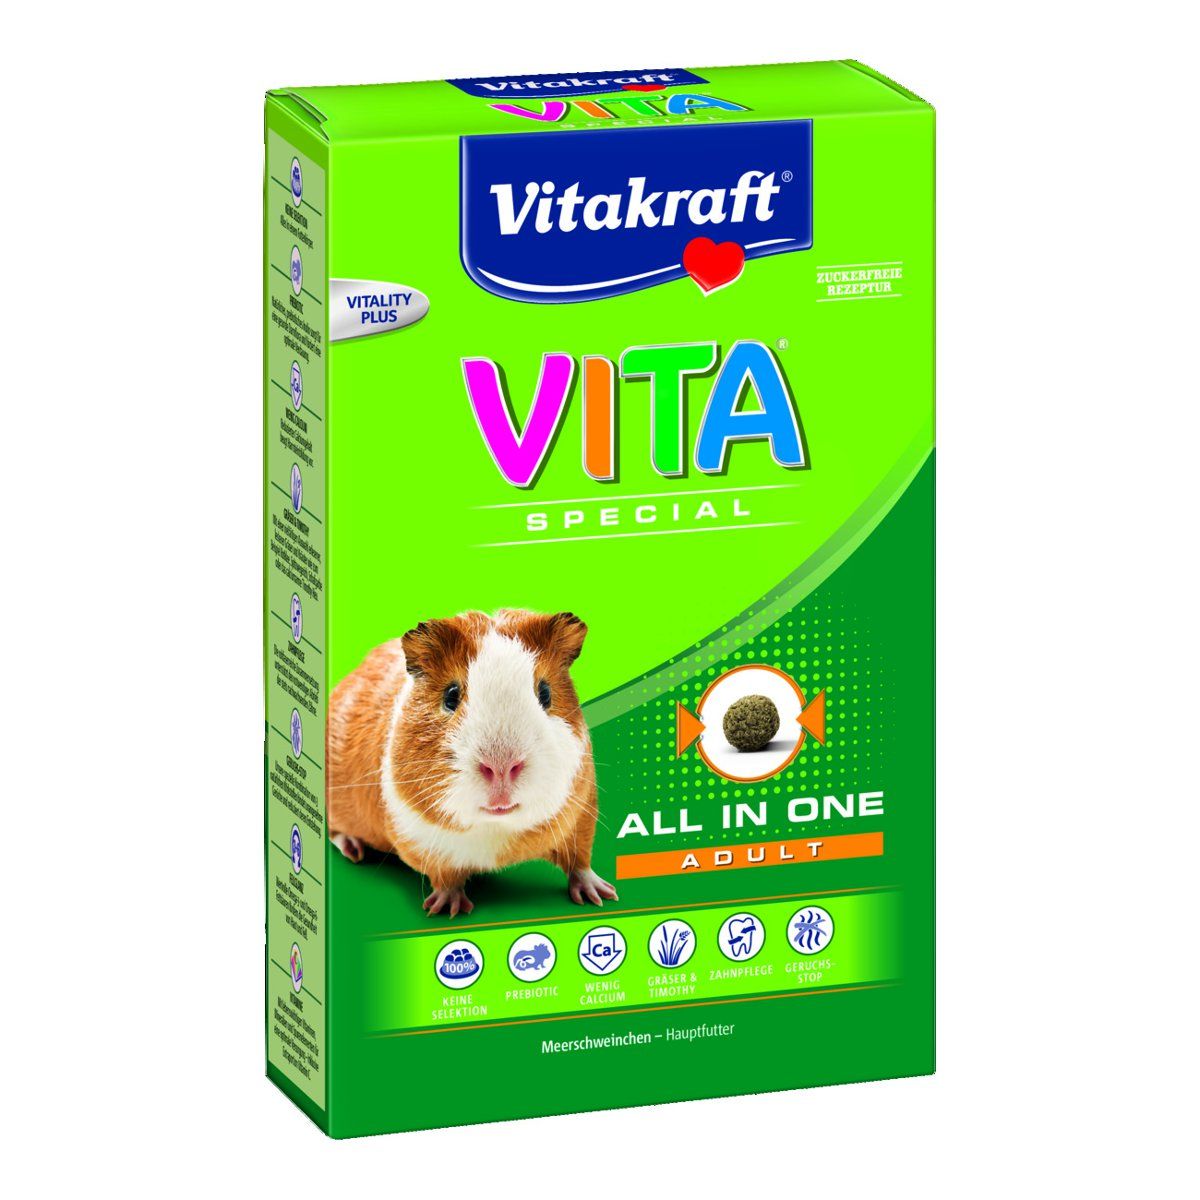 VITAKRAFT Vita Special Adult (Regular) - Meerschweinchen